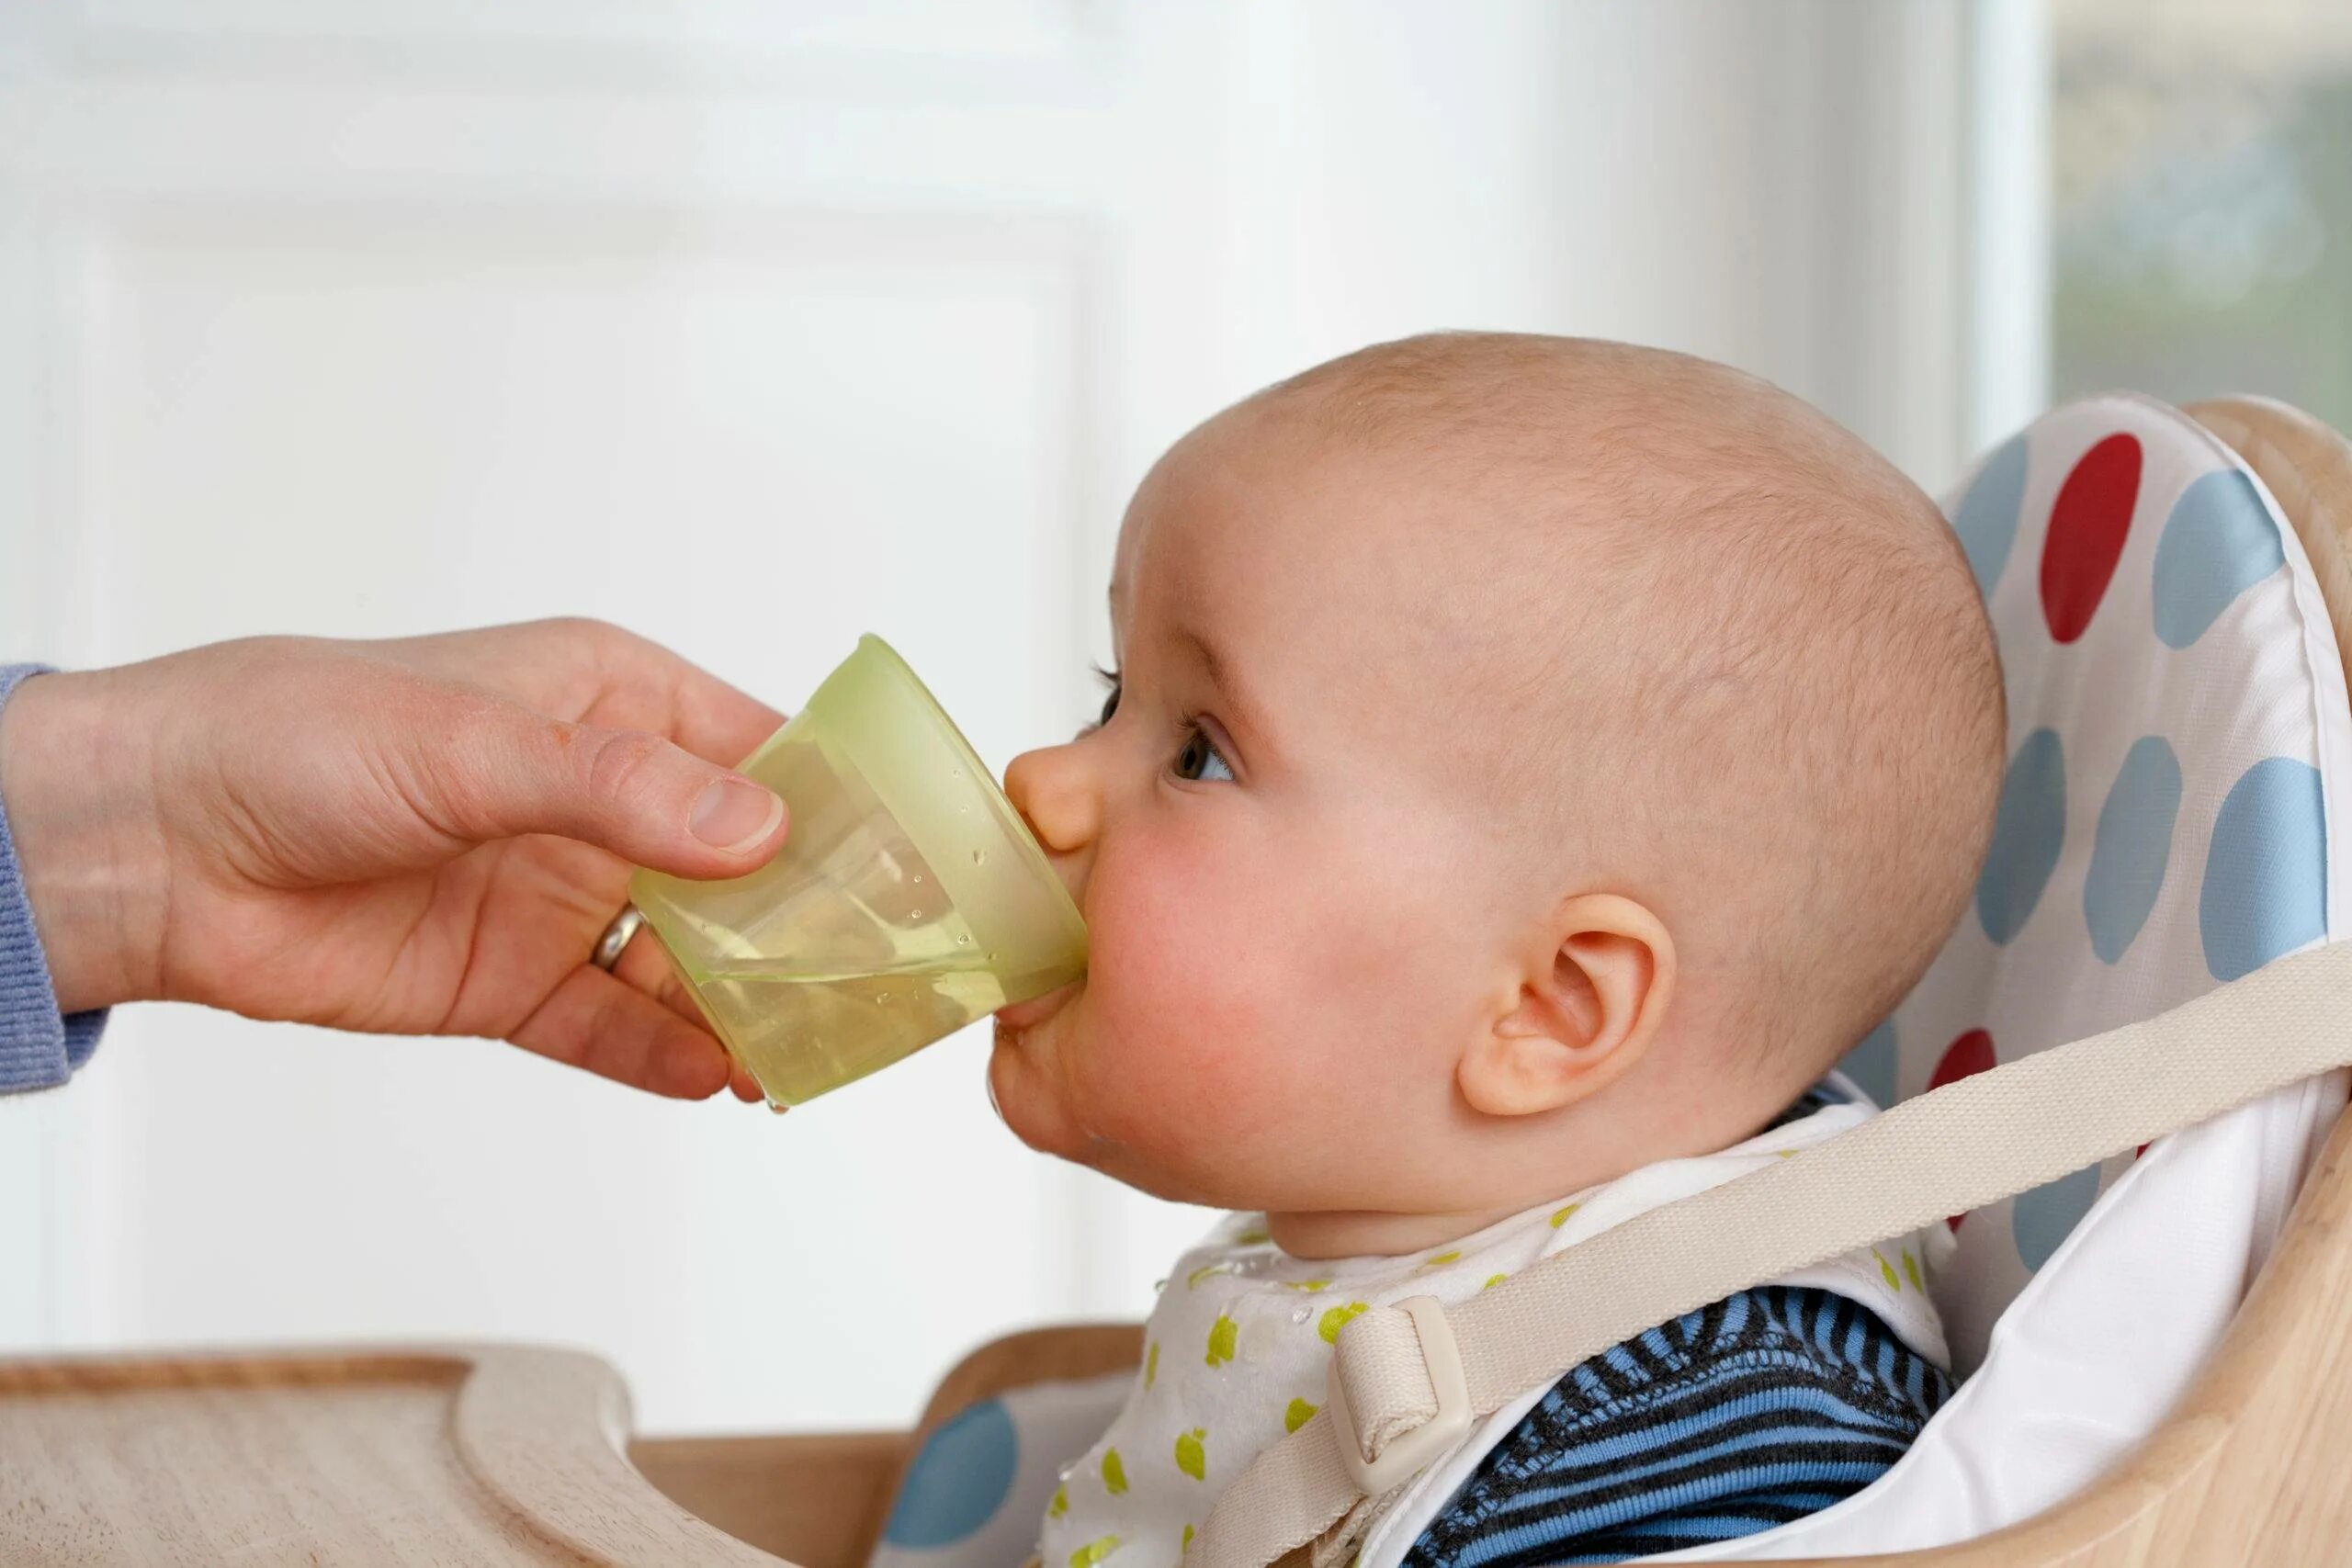 Вода младенцу пить. Докорм ребенка из чашки. Младенец пьет воду. Малыш пьет из чашки. Малыш пьет из кружки.